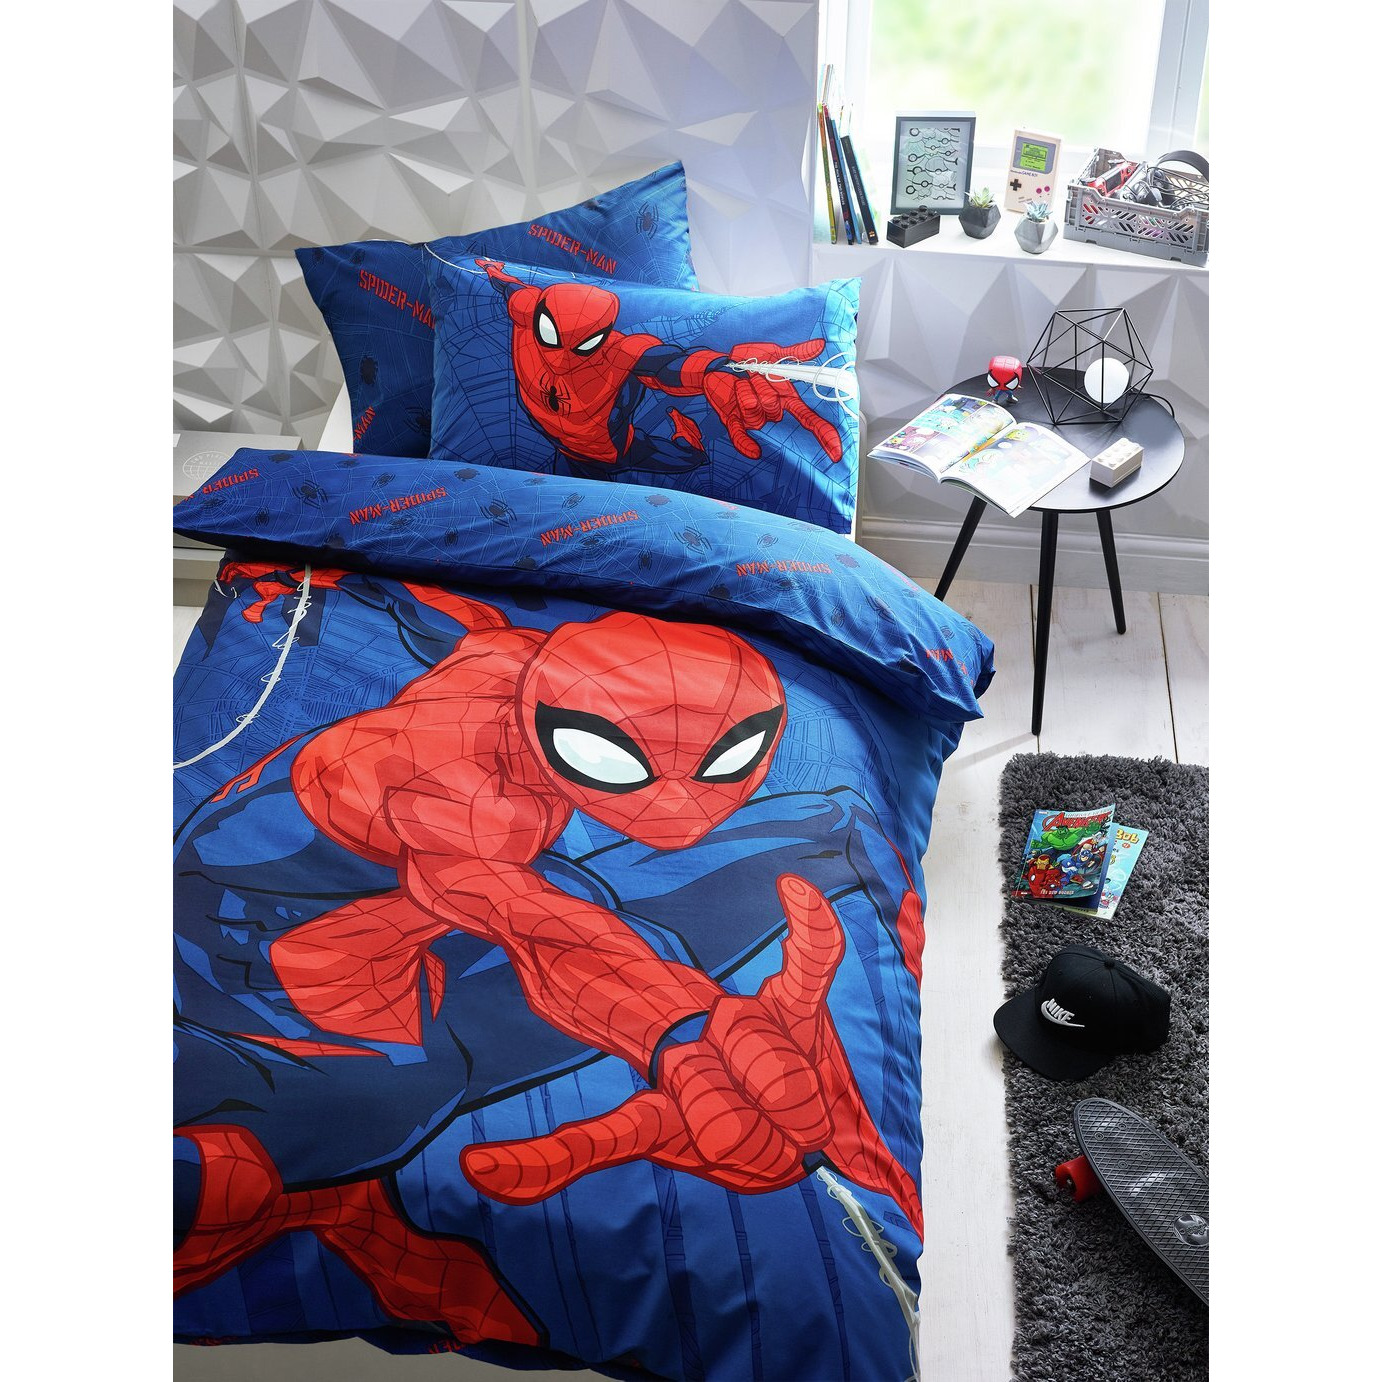 Disney Marvel Spider-Man City Kids Bedding Set - Double - image 1